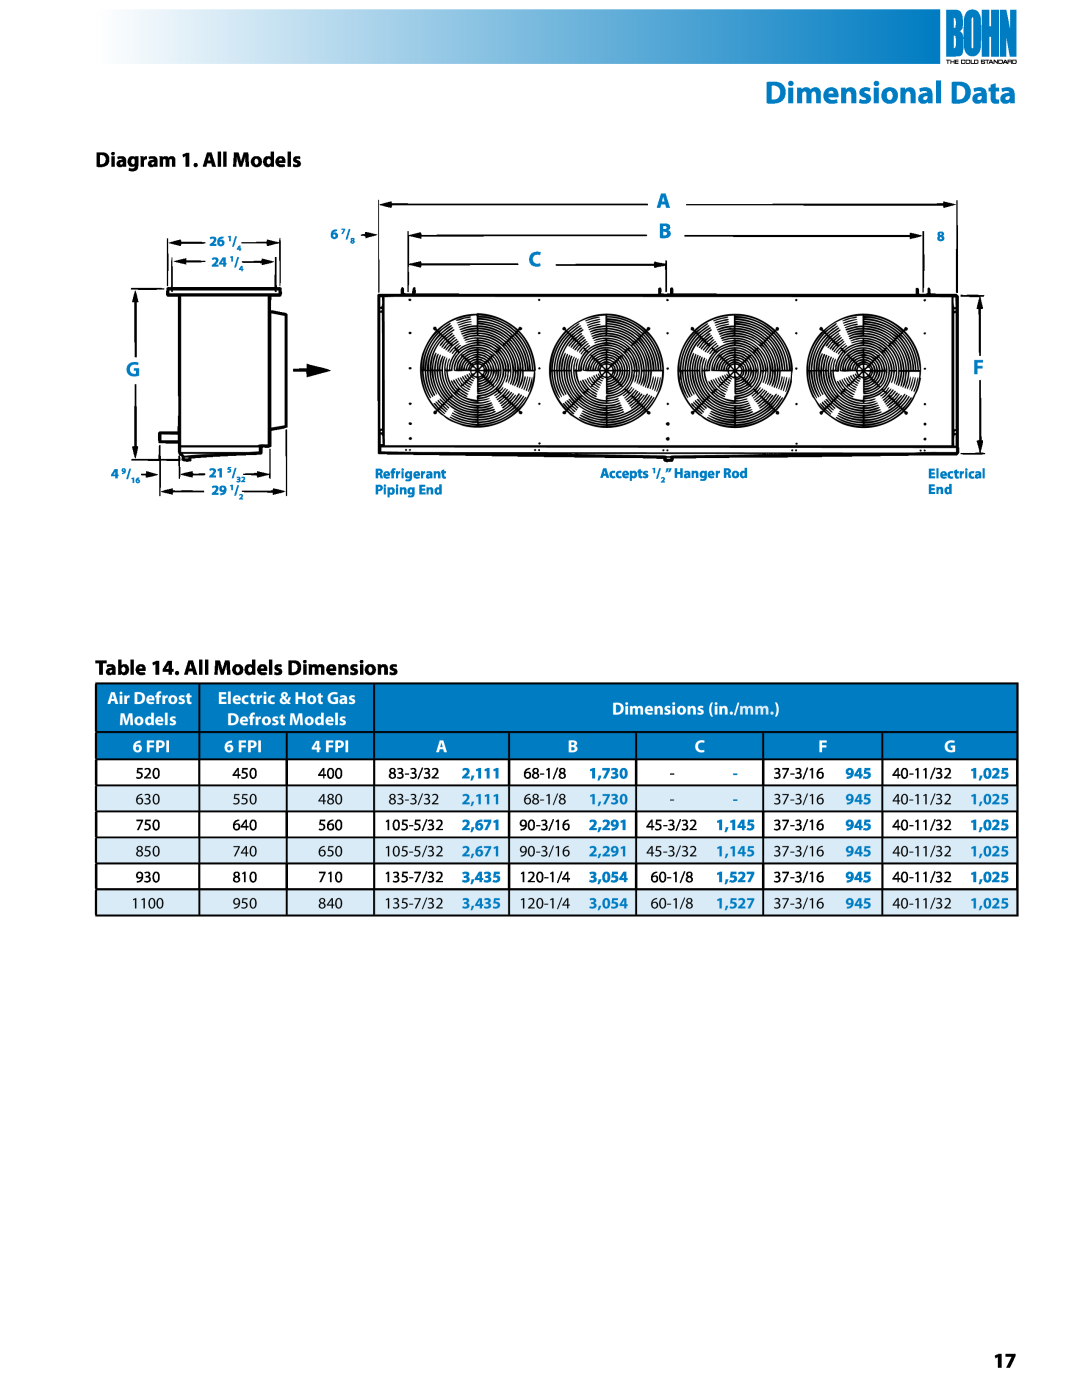 Heatcraft Refrigeration Products BHE, BHG, BHF, BHL, BHA manual Dimensional Data, Diagram 1. All Models, All Models Dimensions 